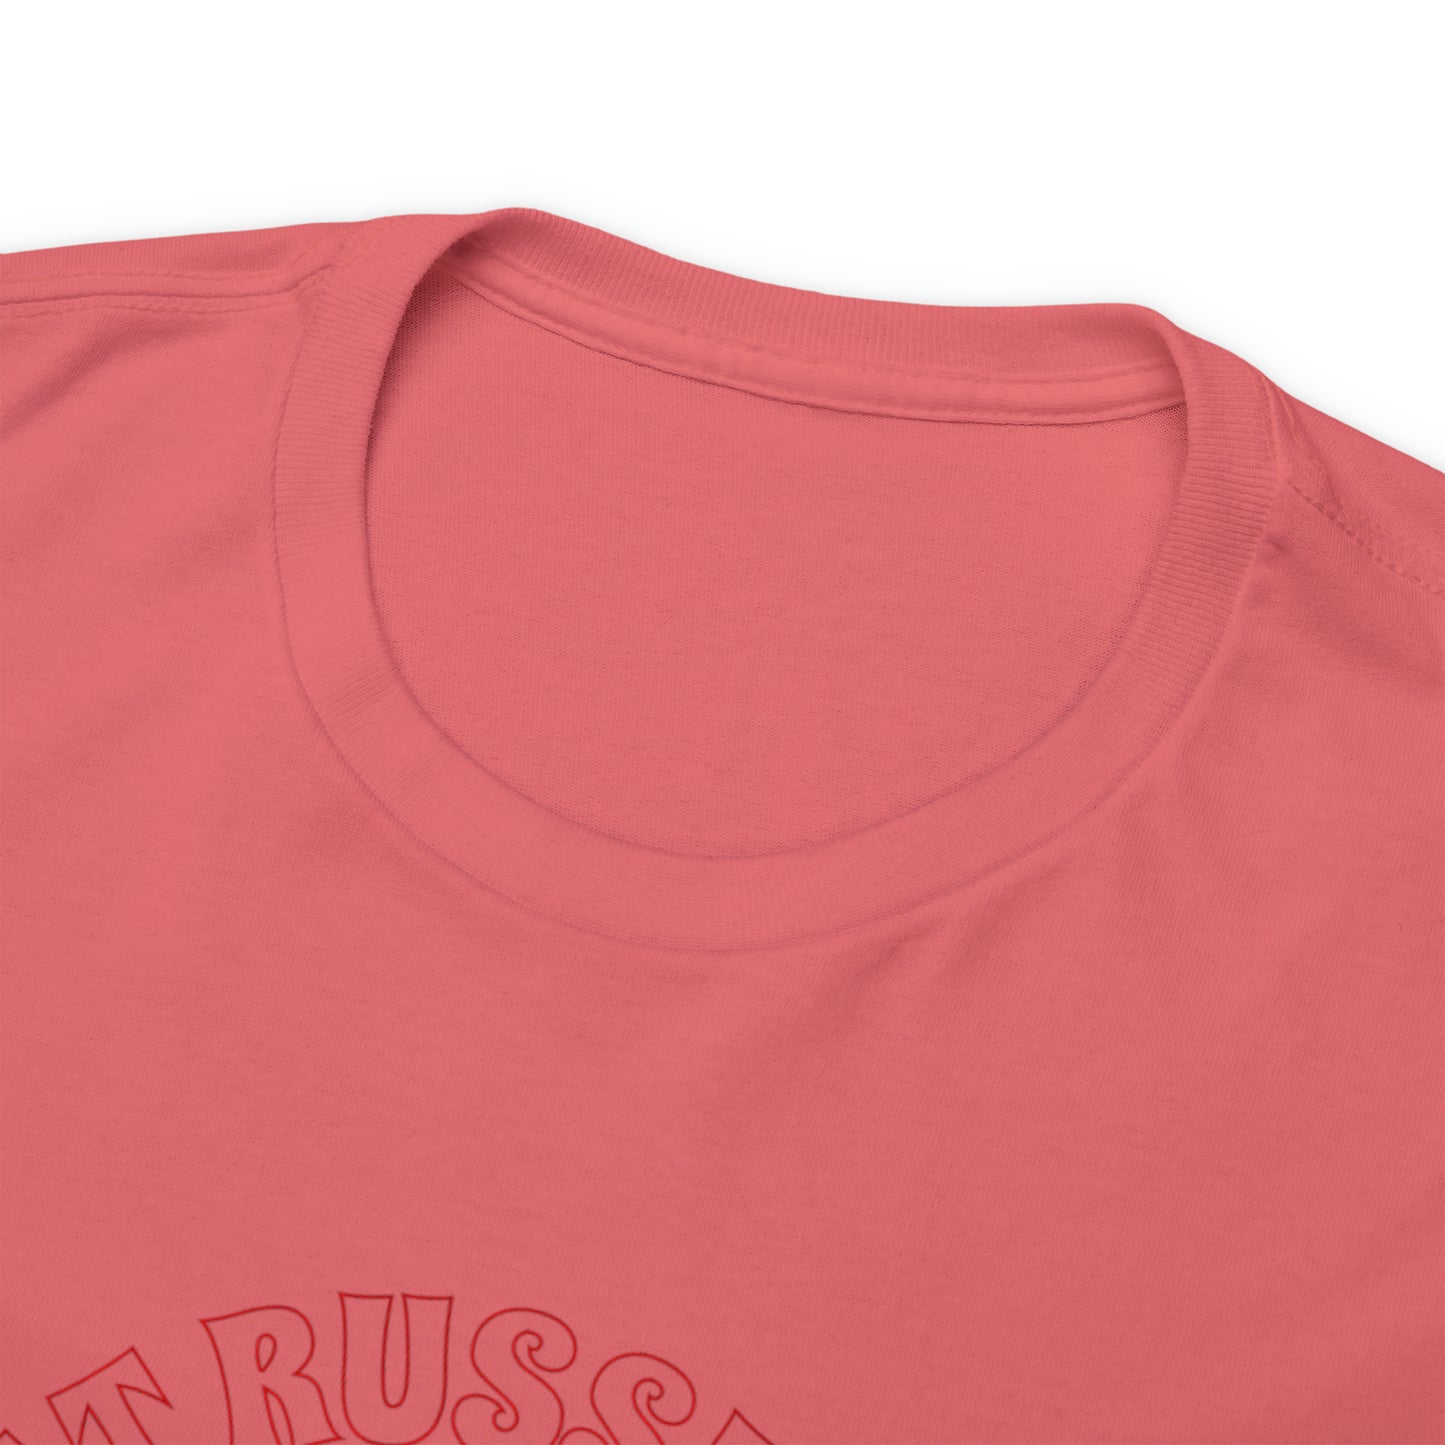 Fat Russell's Barklaggio Casino - English Bulldog T Shirt - Unisex Heavy Cotton Tee